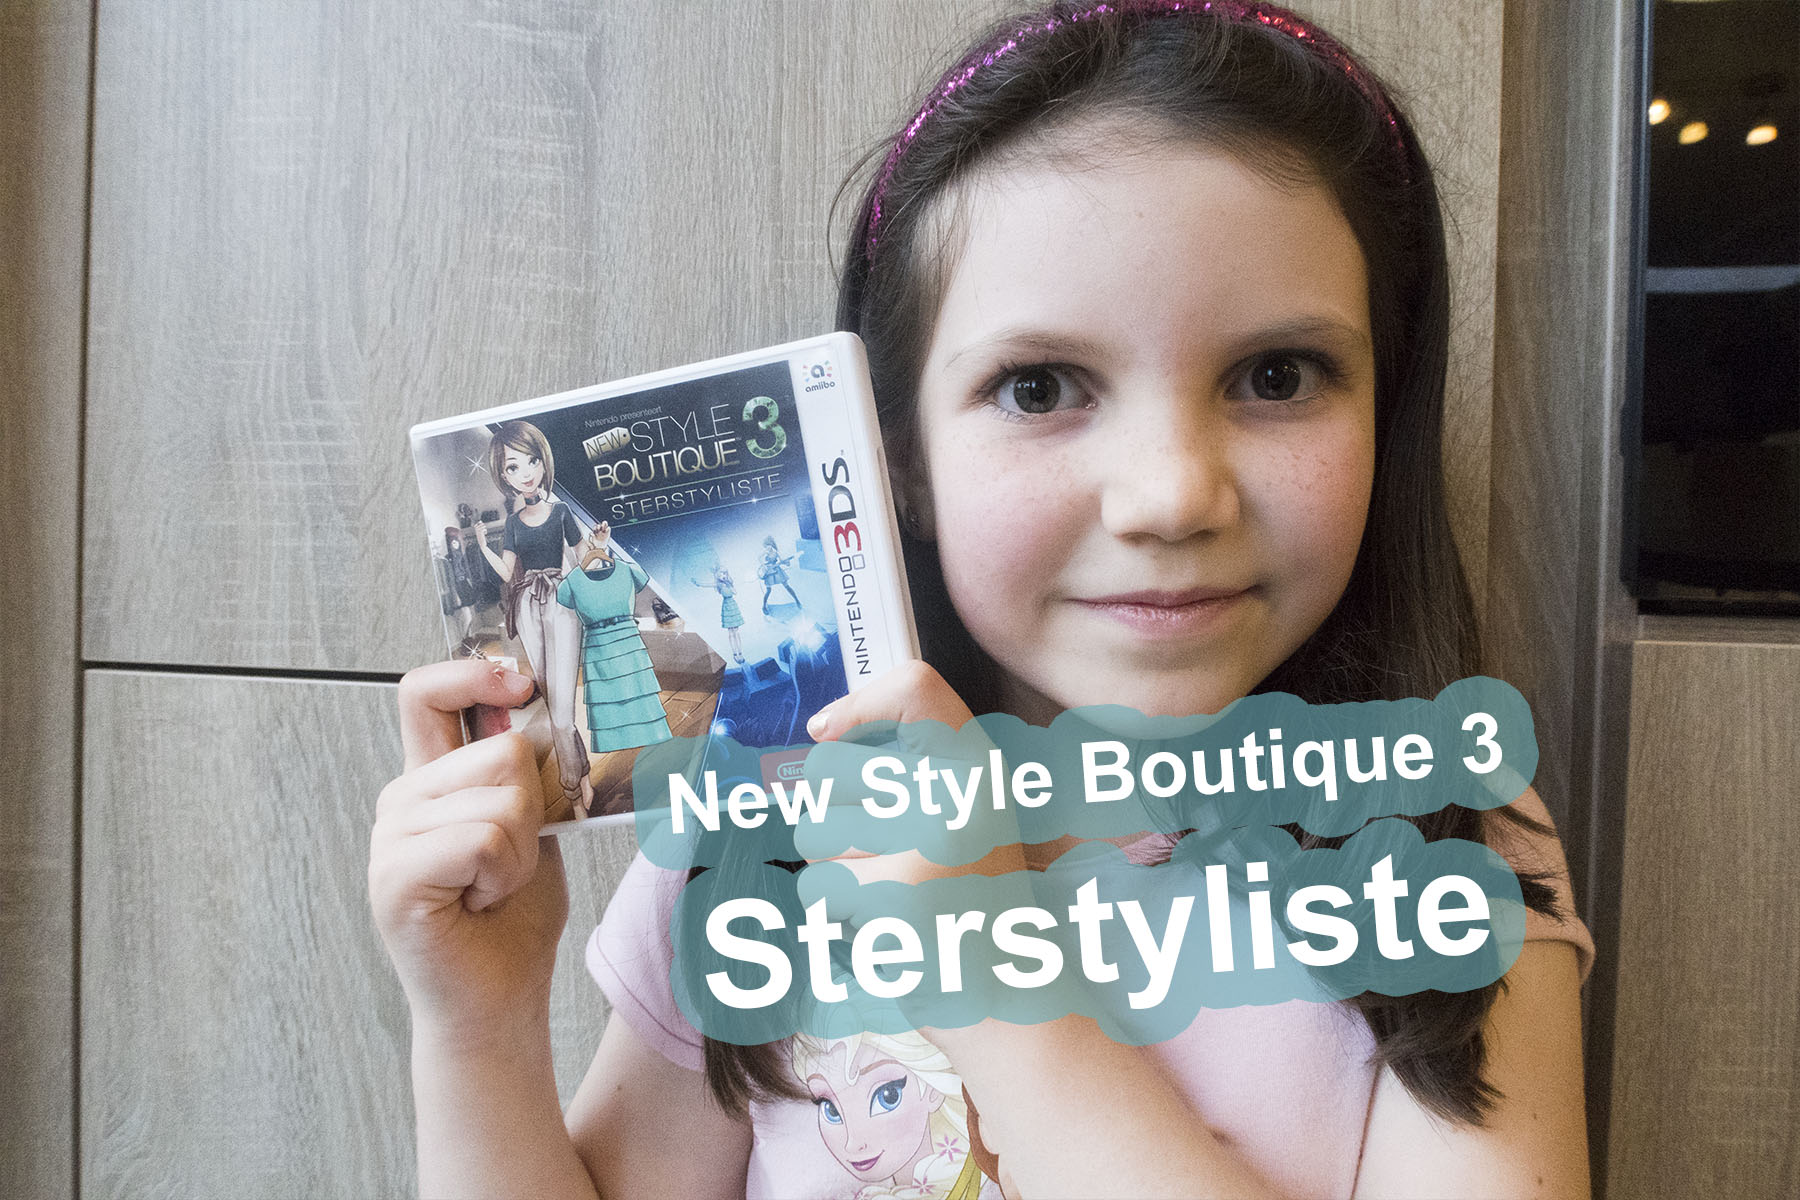 Nintendo New Style Boutique 3 Sterstylist Mama ABC Blog Sofie Lambrecht